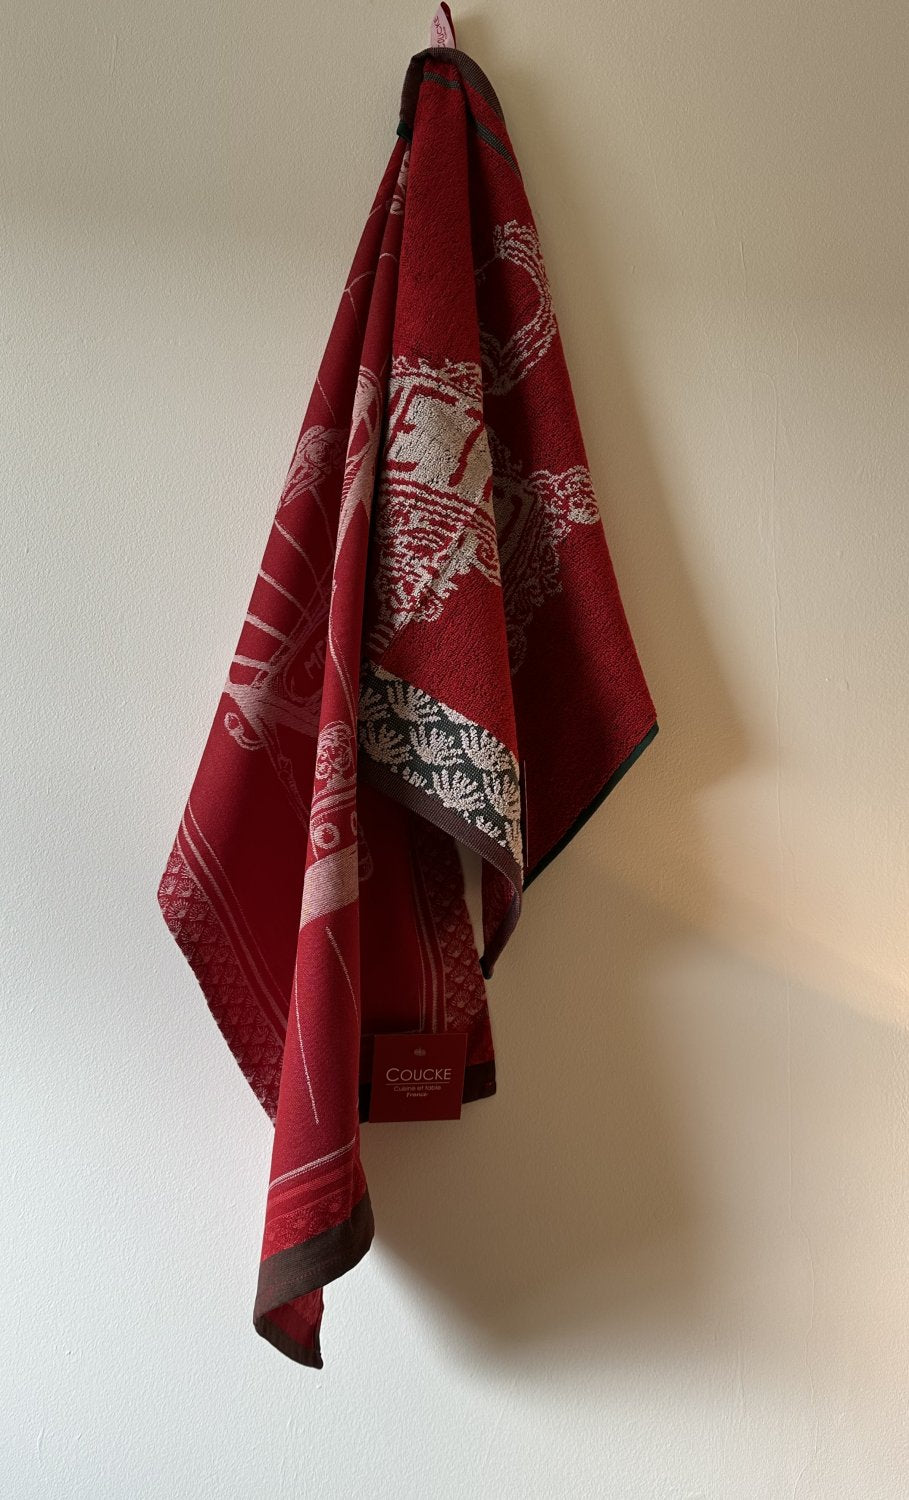 Coucke "Metropolitan - Rouge", Woven cotton tea towel. Designed in France.